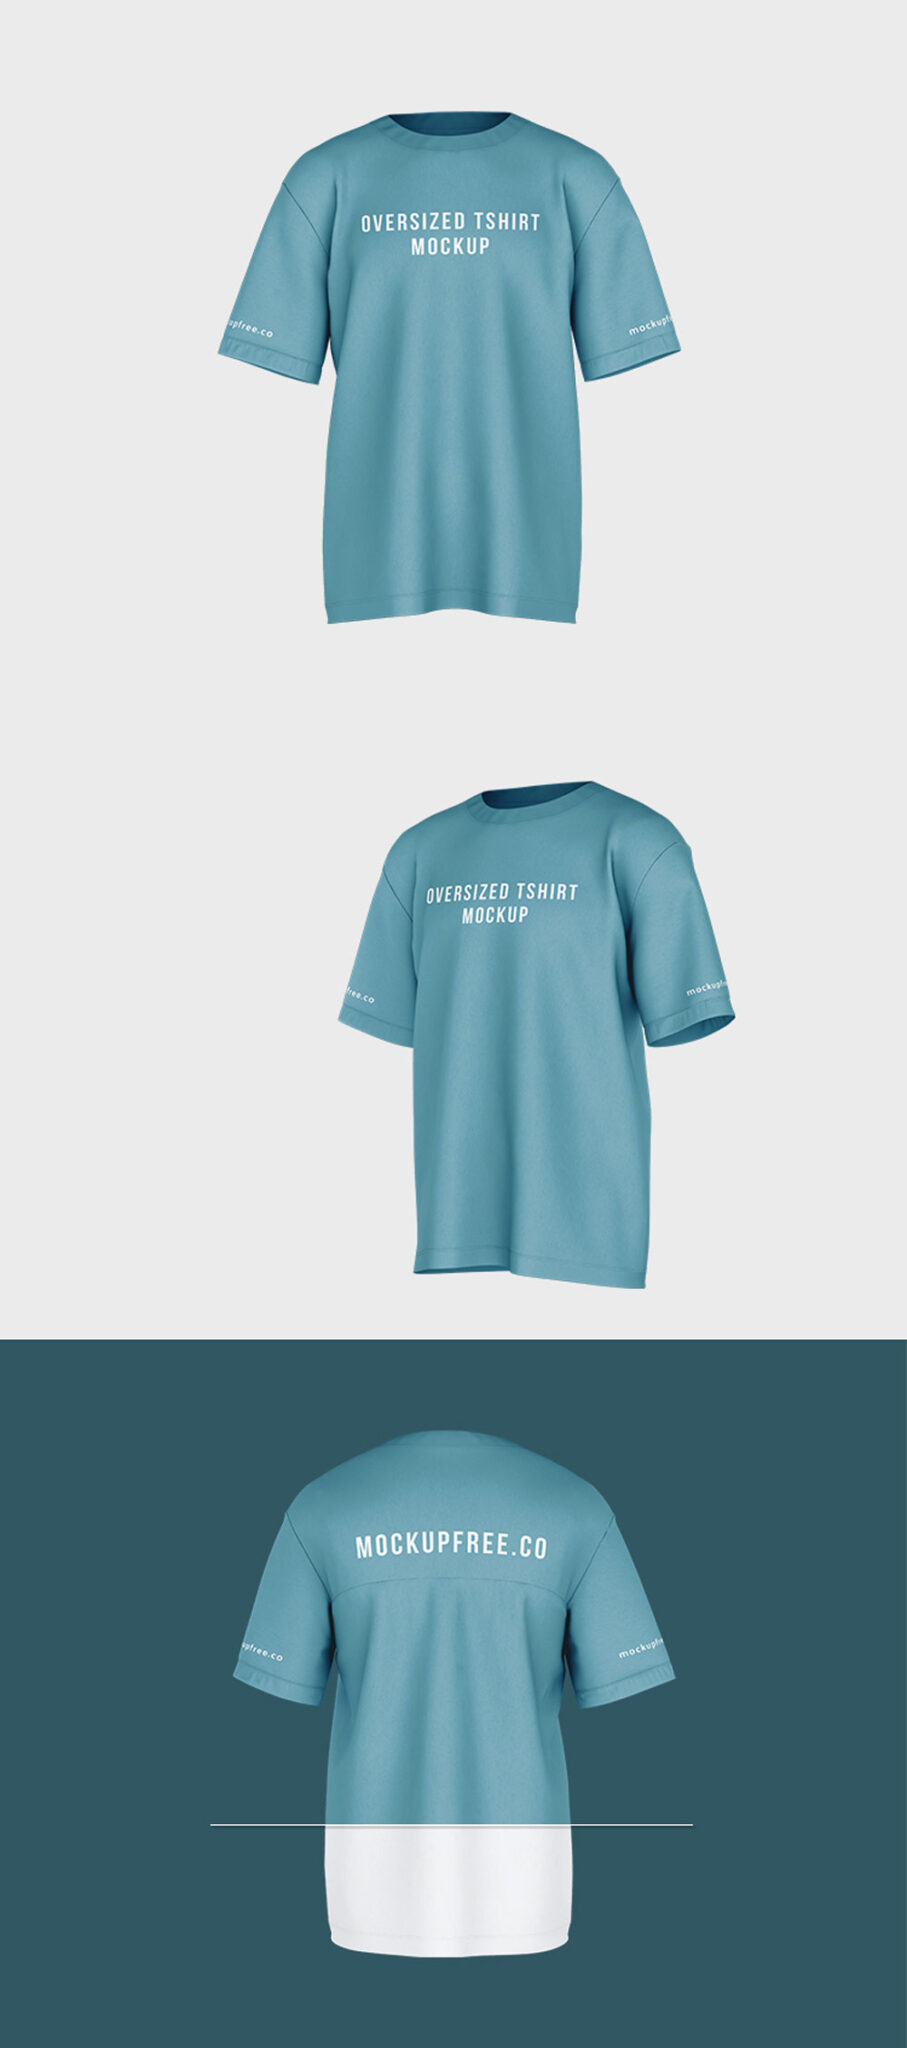 Oversized T-Shirt Mockup Free Download